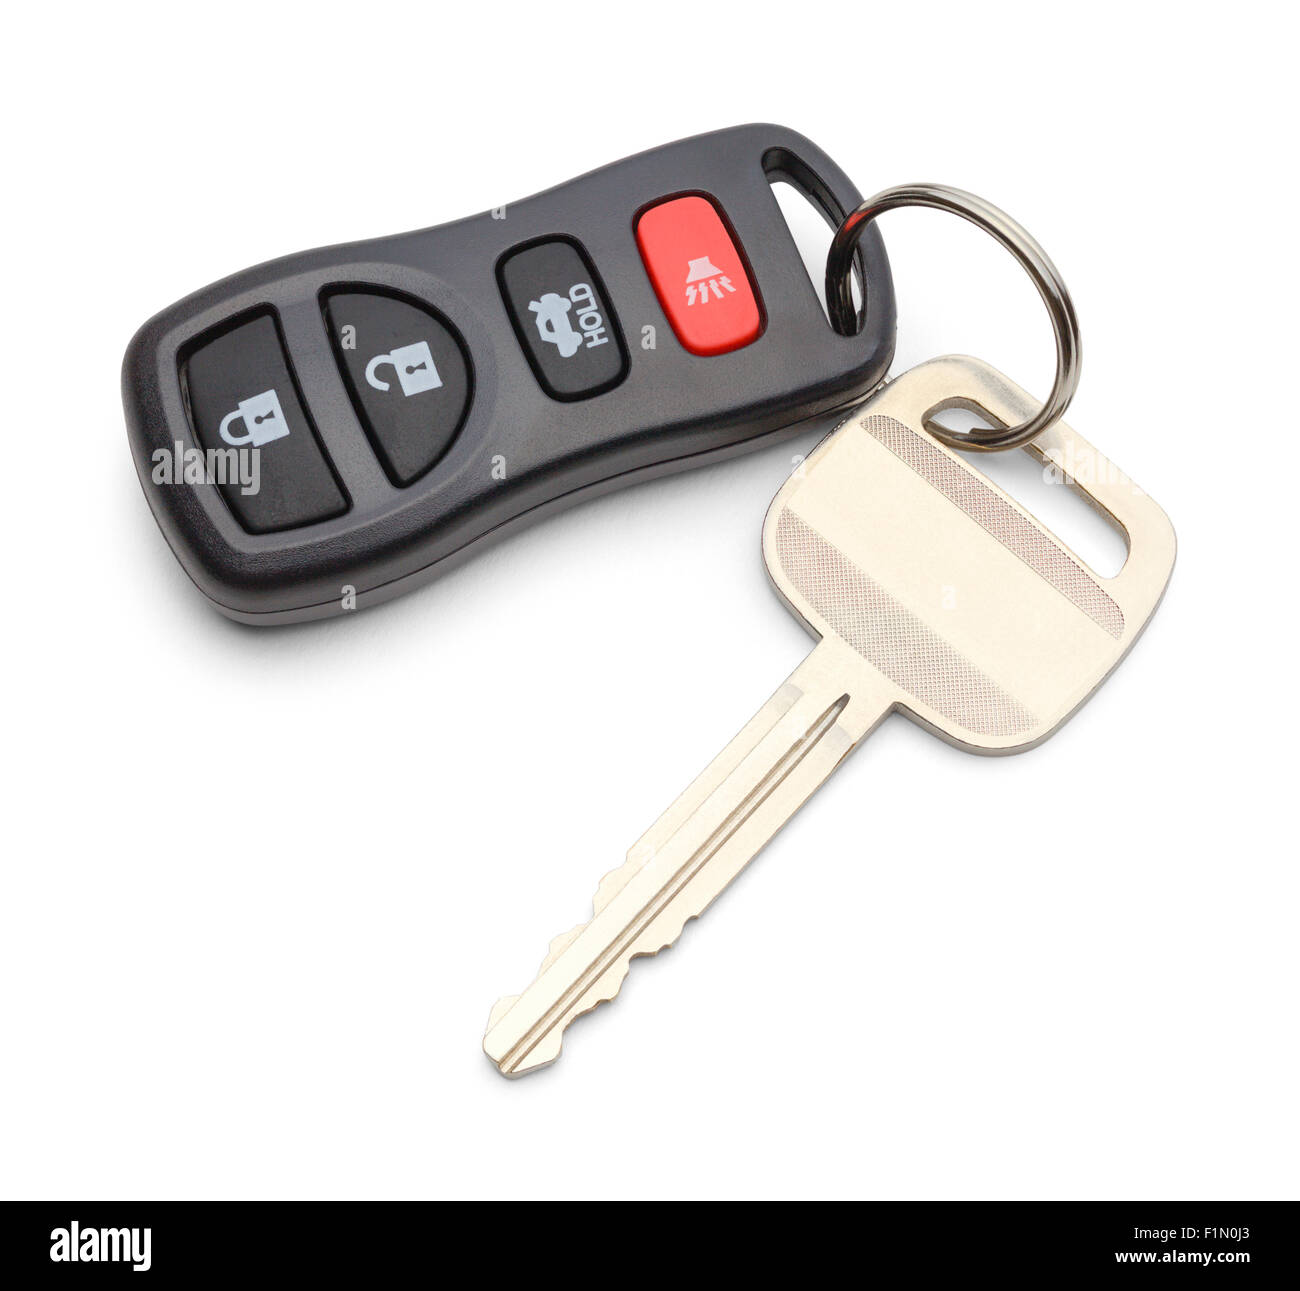 Single Car Key with Key less Remote Isolated on White Background. Stock Photo